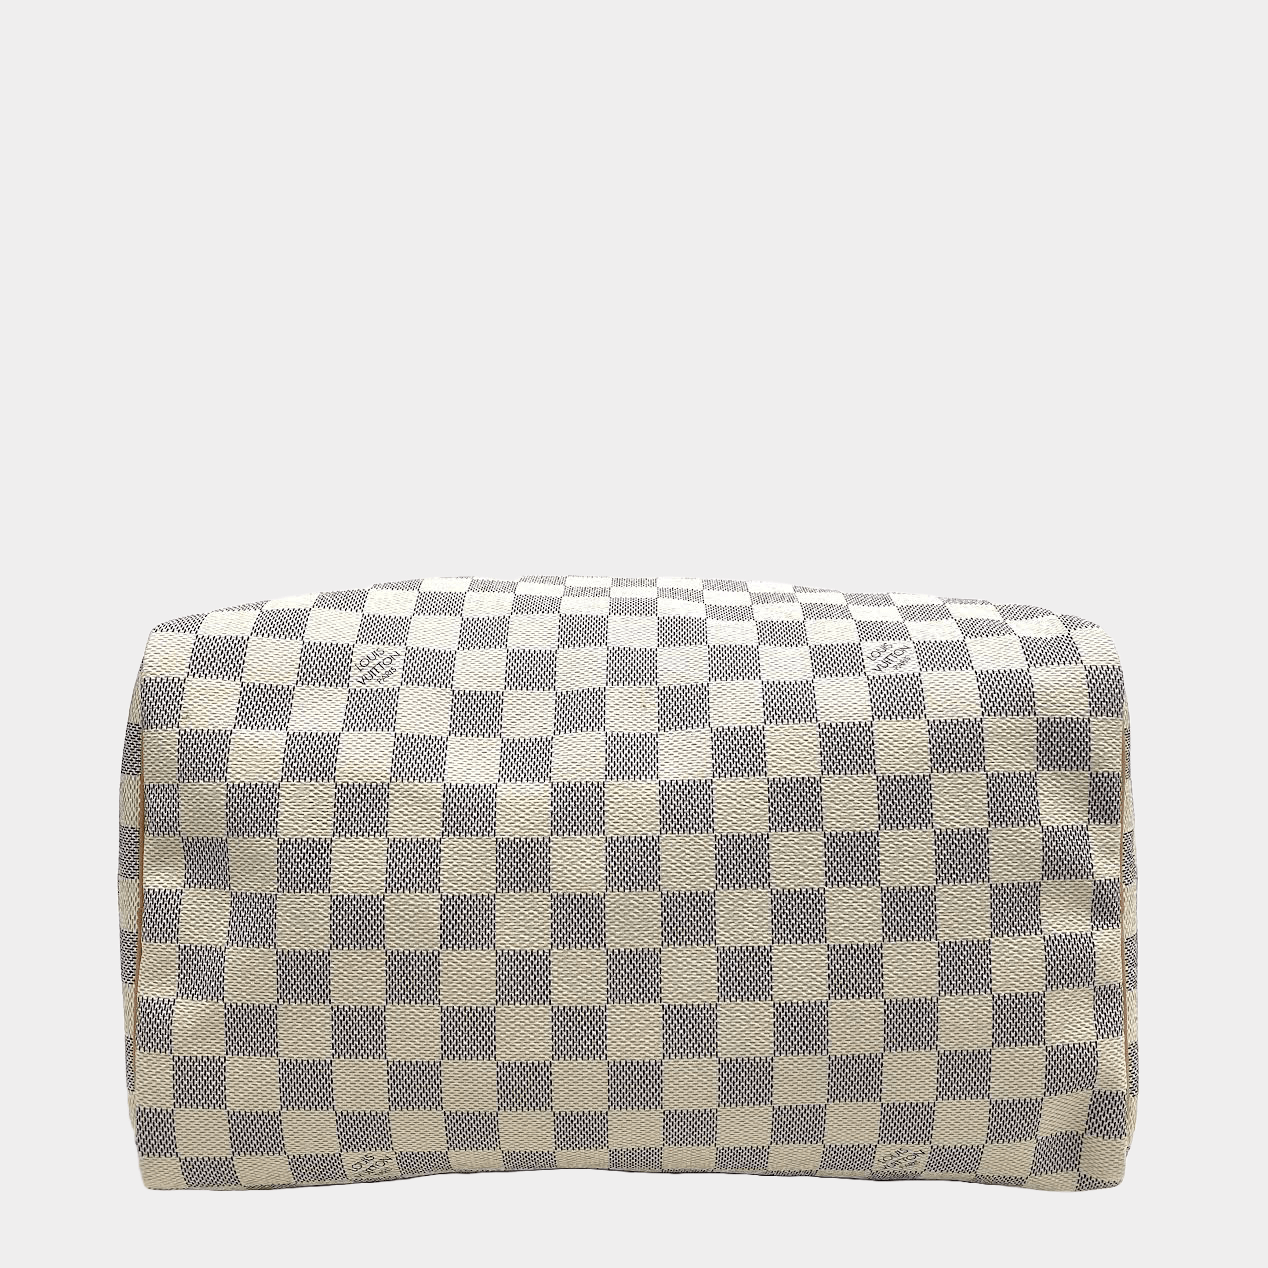 Louis Vuitton, Bags, Lv Original Damier Azur Canvas Speedy 3